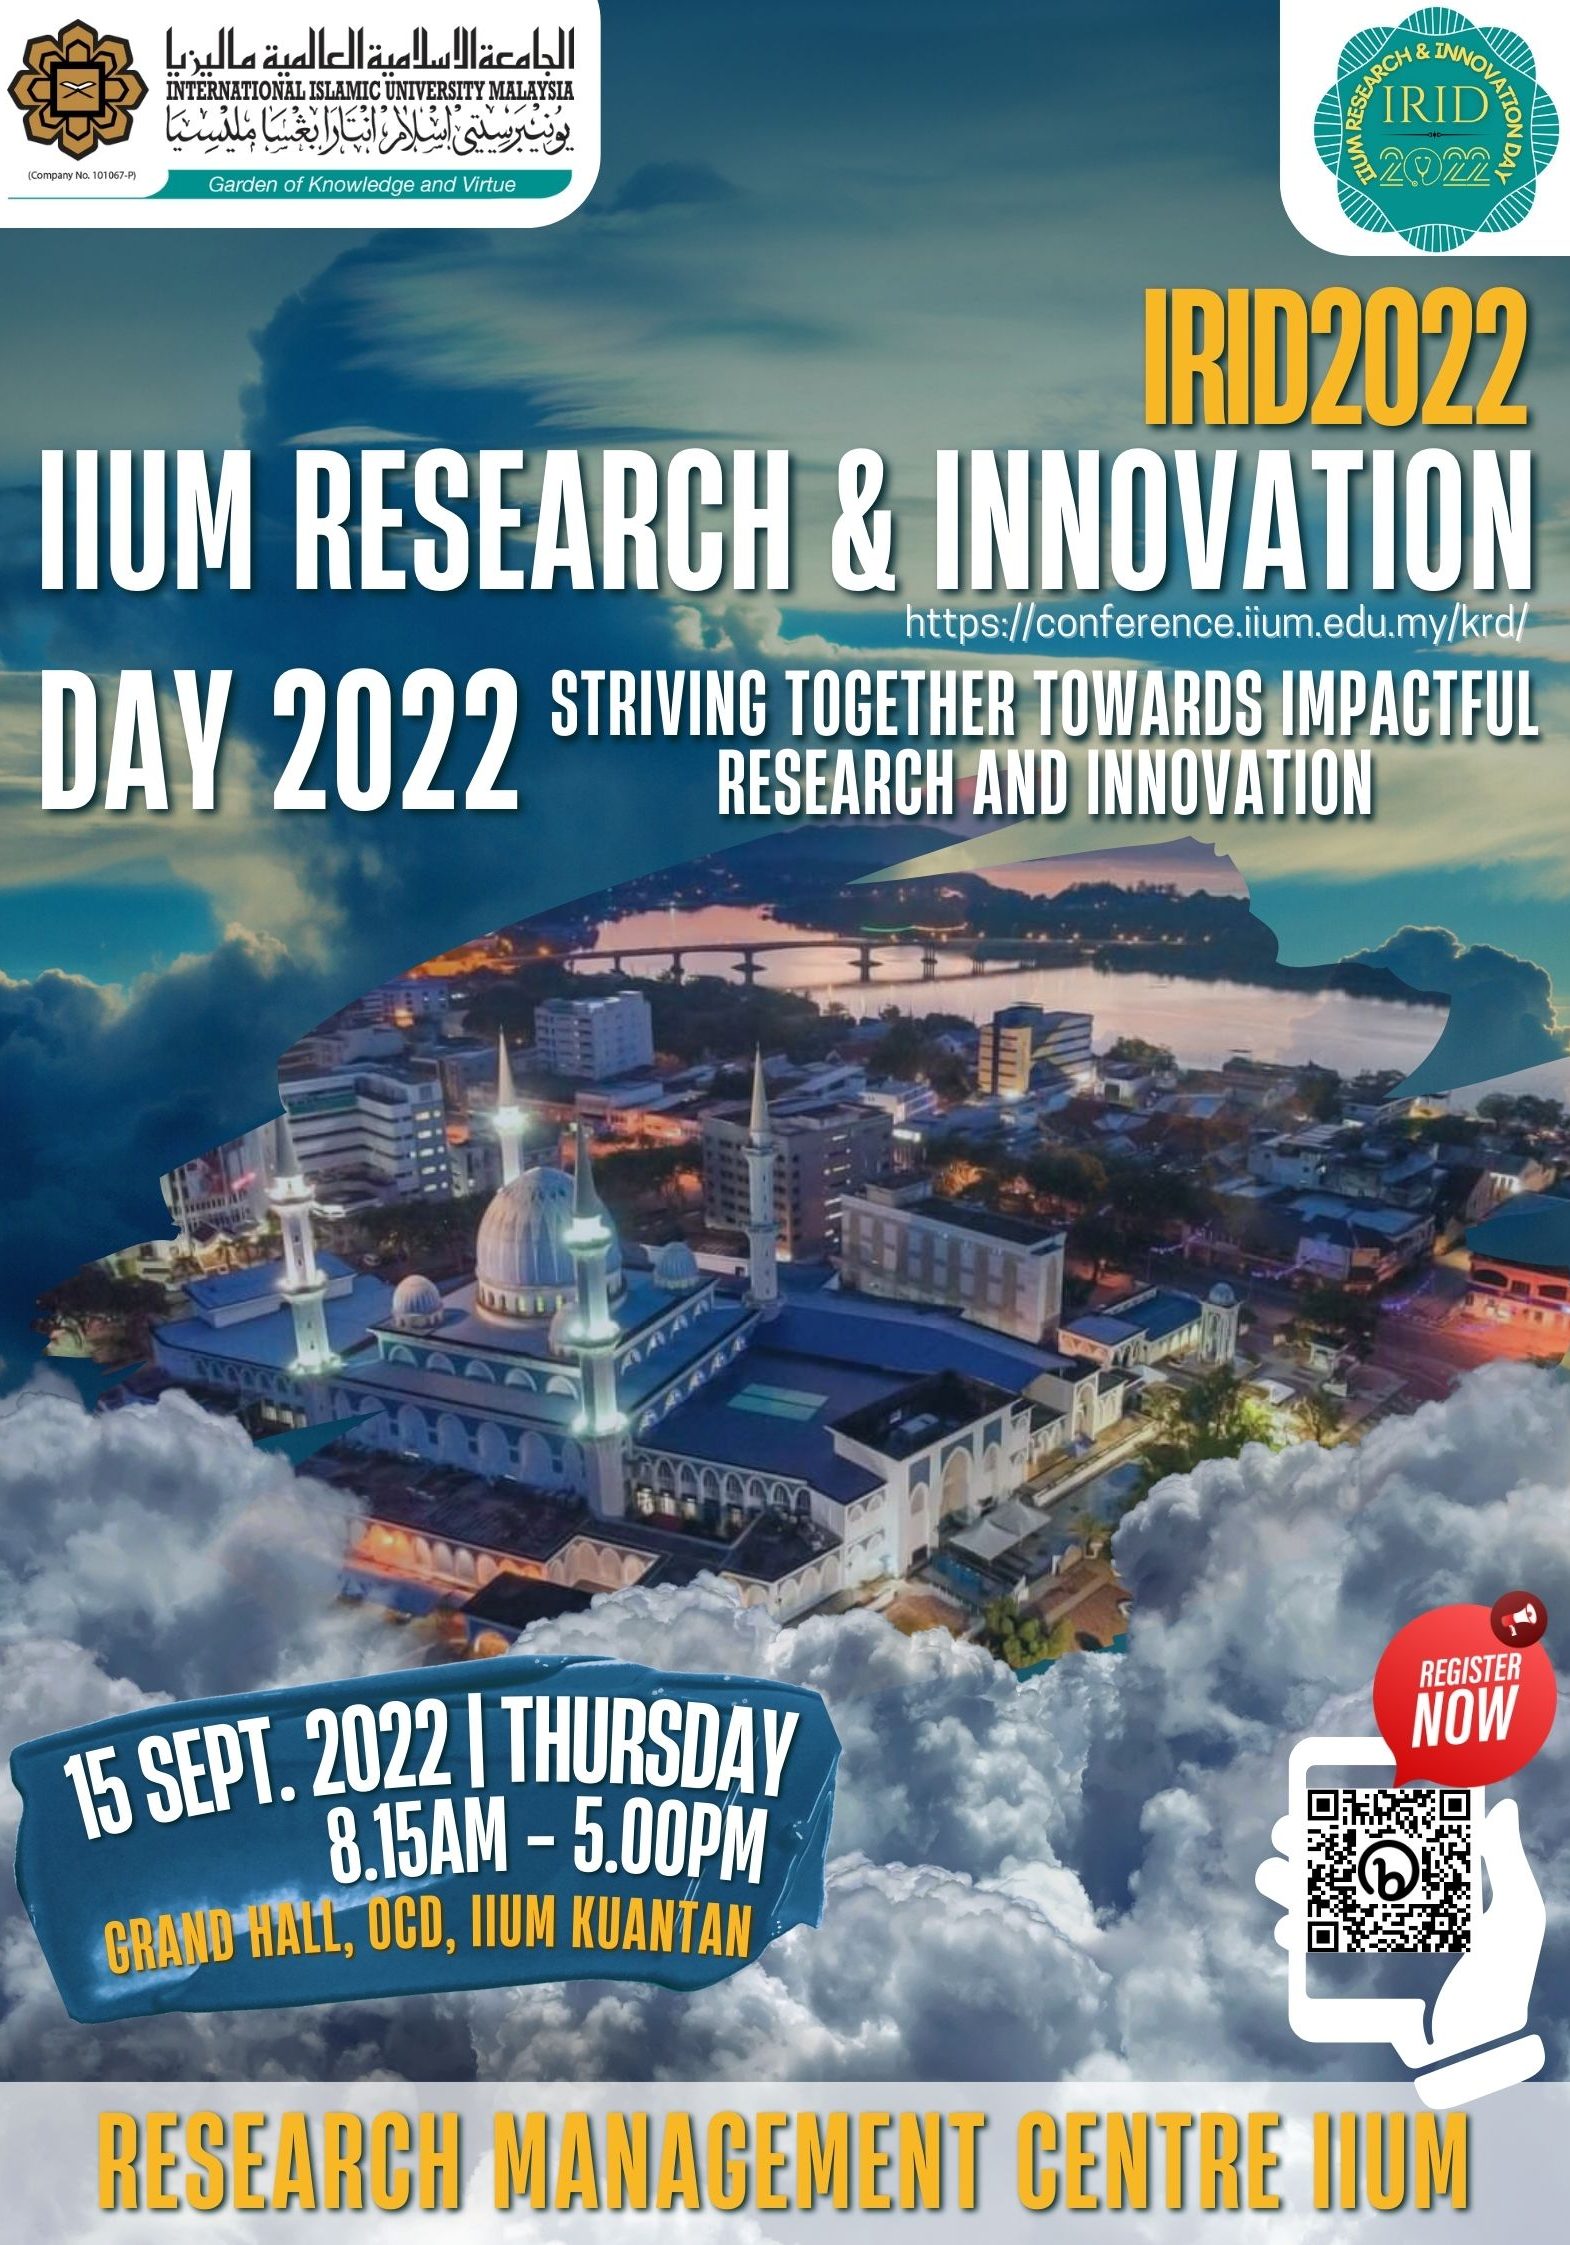 IIUM RESEARCH & INNOVATION DAY (IRID) 2022